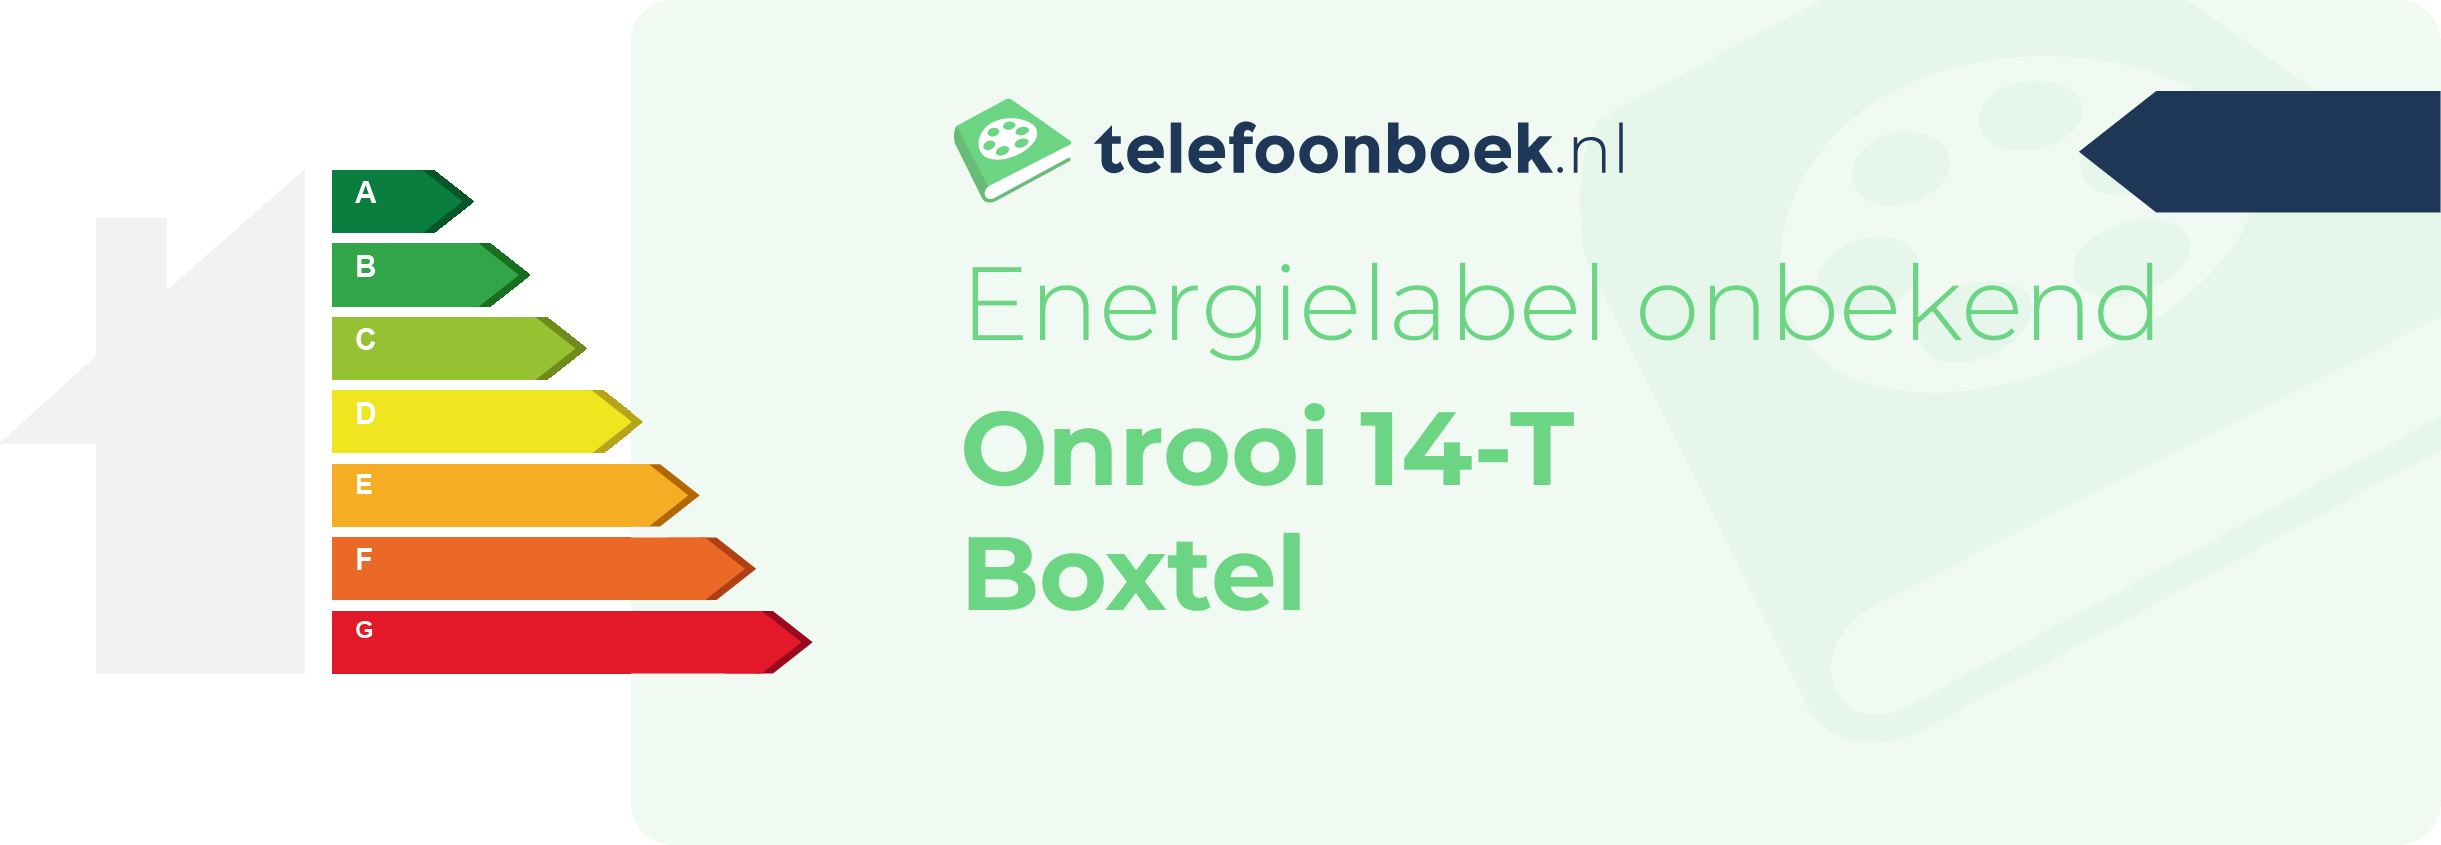 Energielabel Onrooi 14-T Boxtel